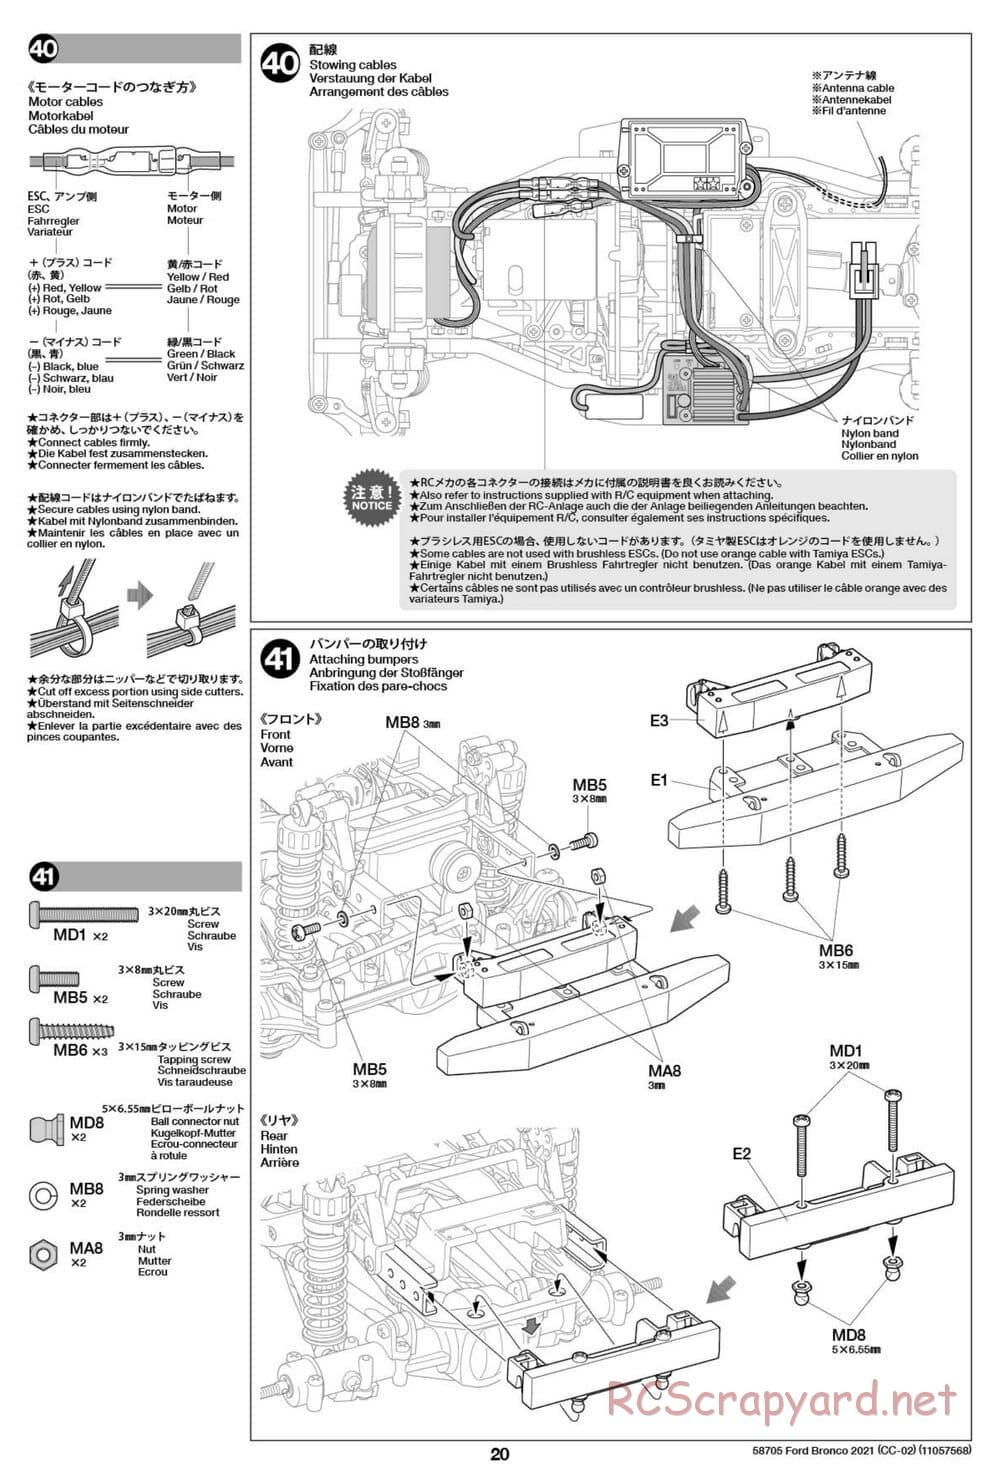 Tamiya - Ford Bronco 2021 - CC-02 Chassis - Manual - Page 20